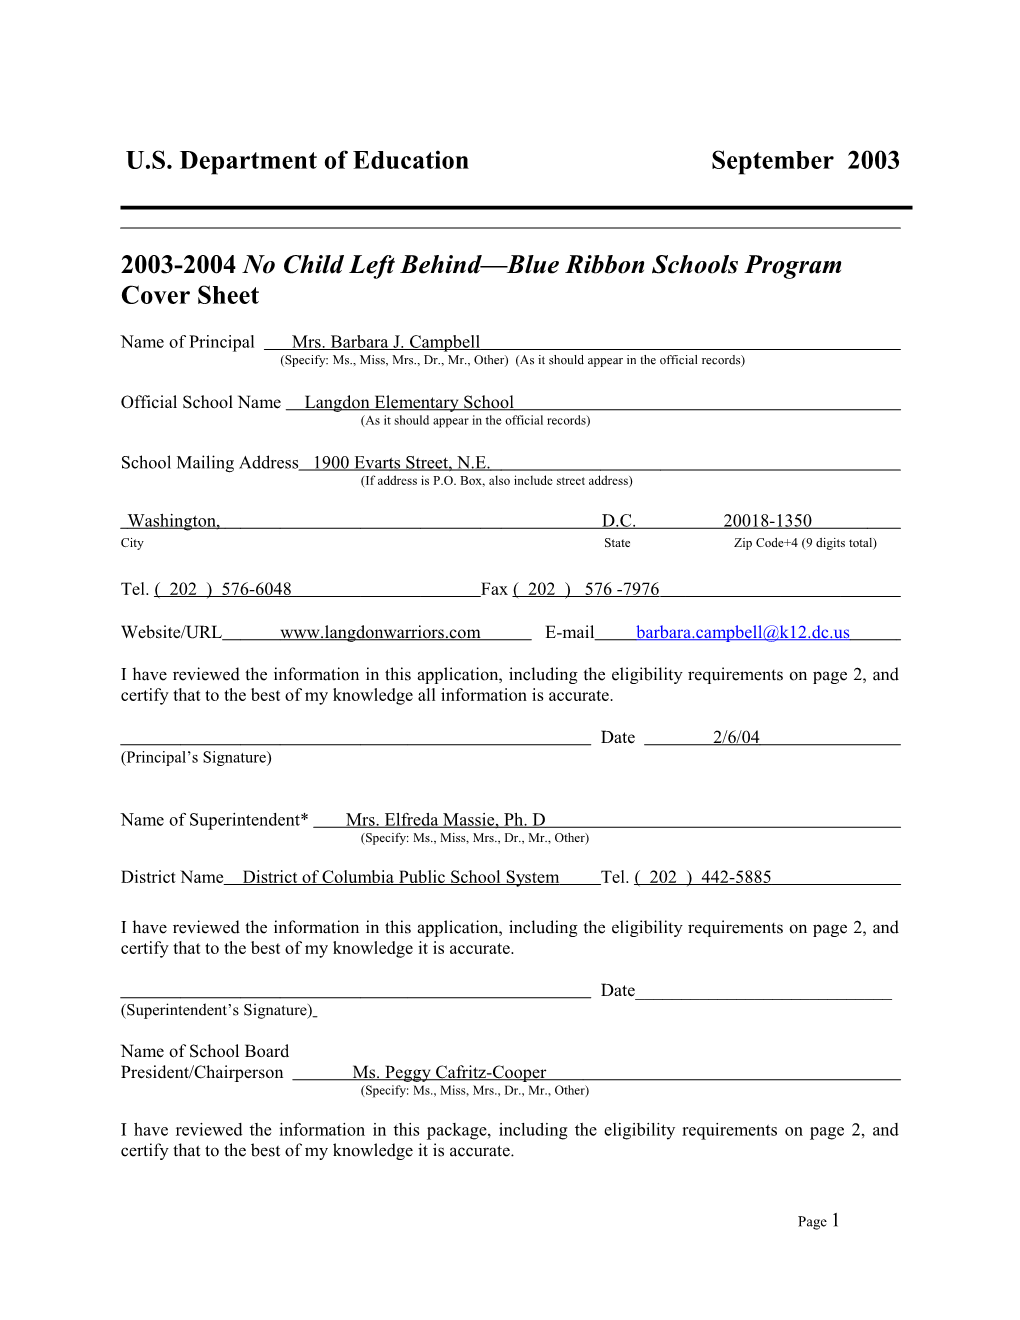 Langdon Elementary School 2004 No Child Left Behind-Blue Ribbon School Application (Msword)